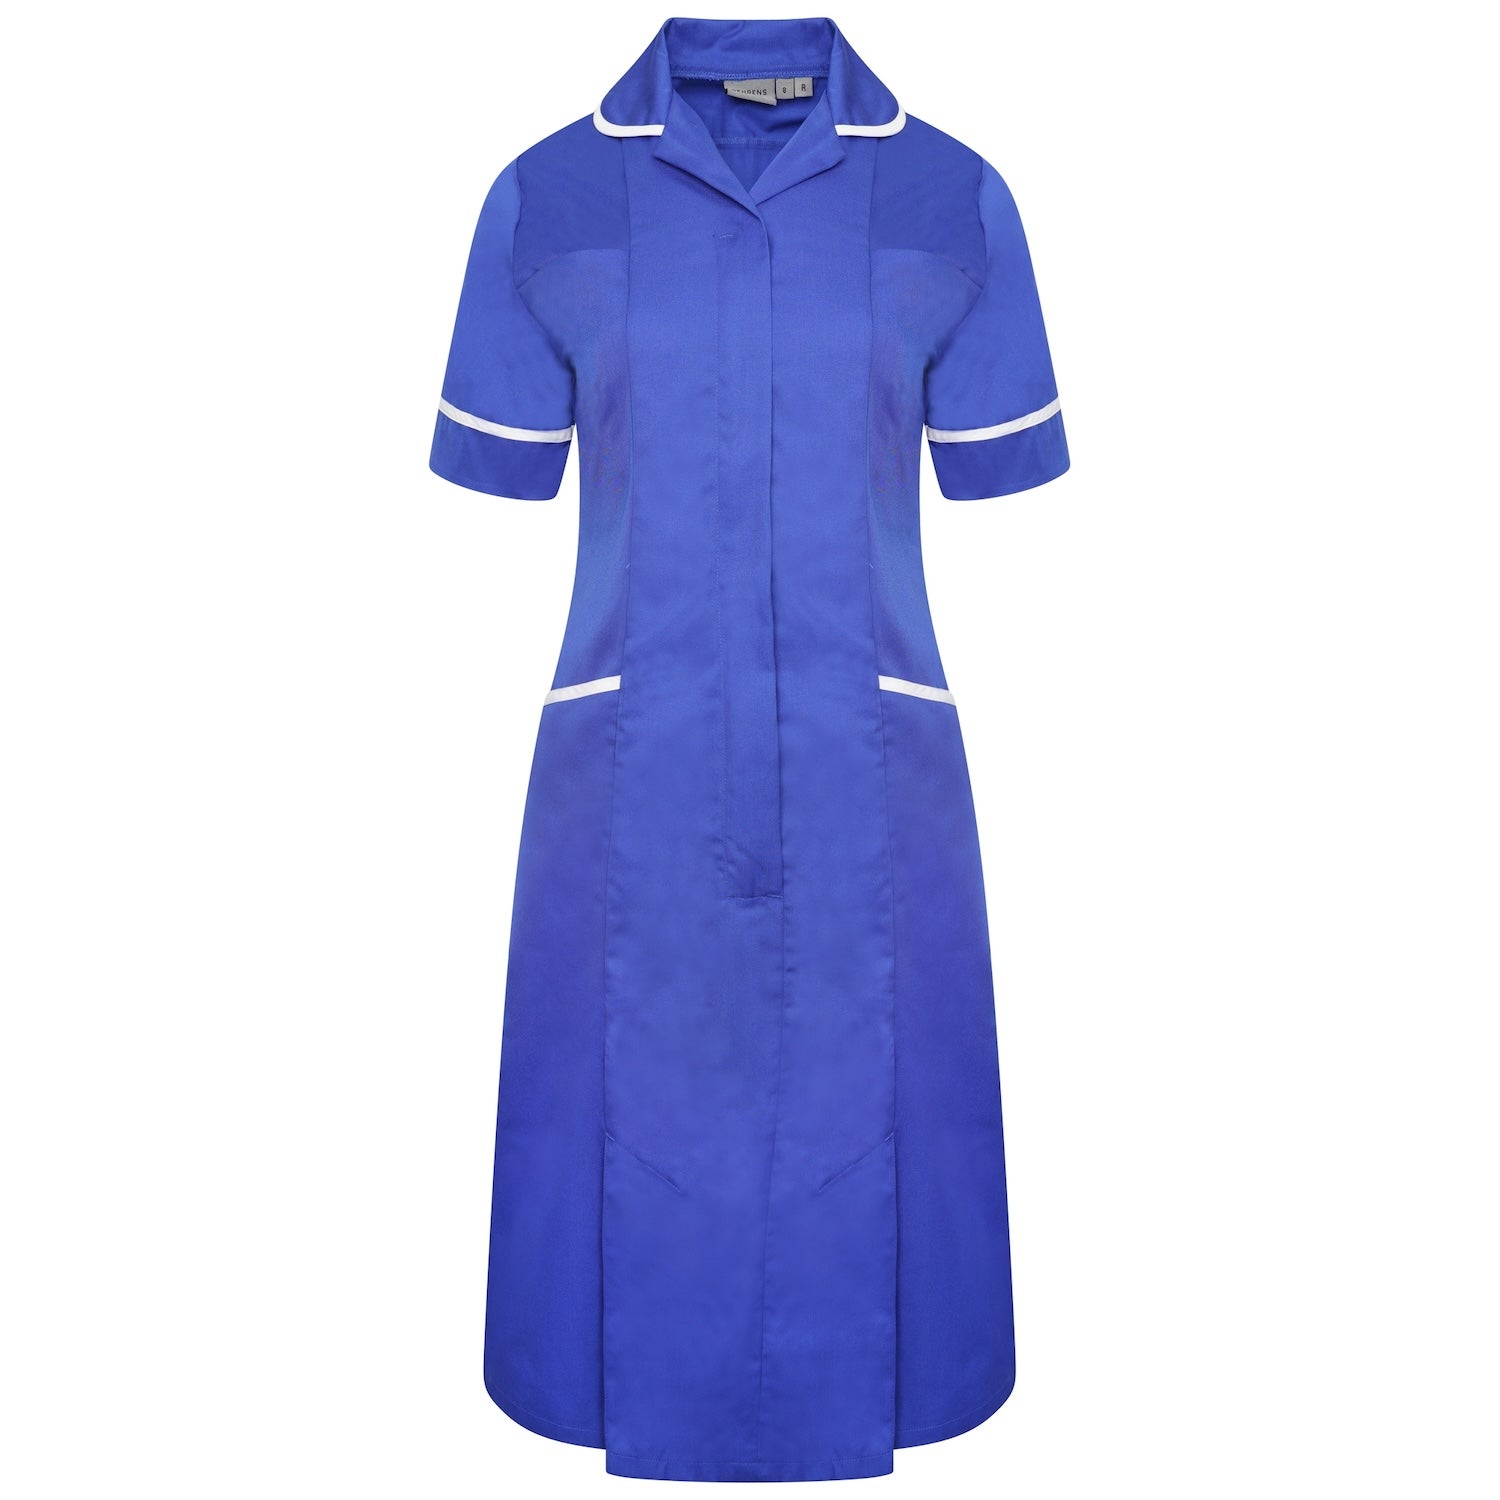 Ladies Healthcare Dress | Round Collar | Royal/White Trim